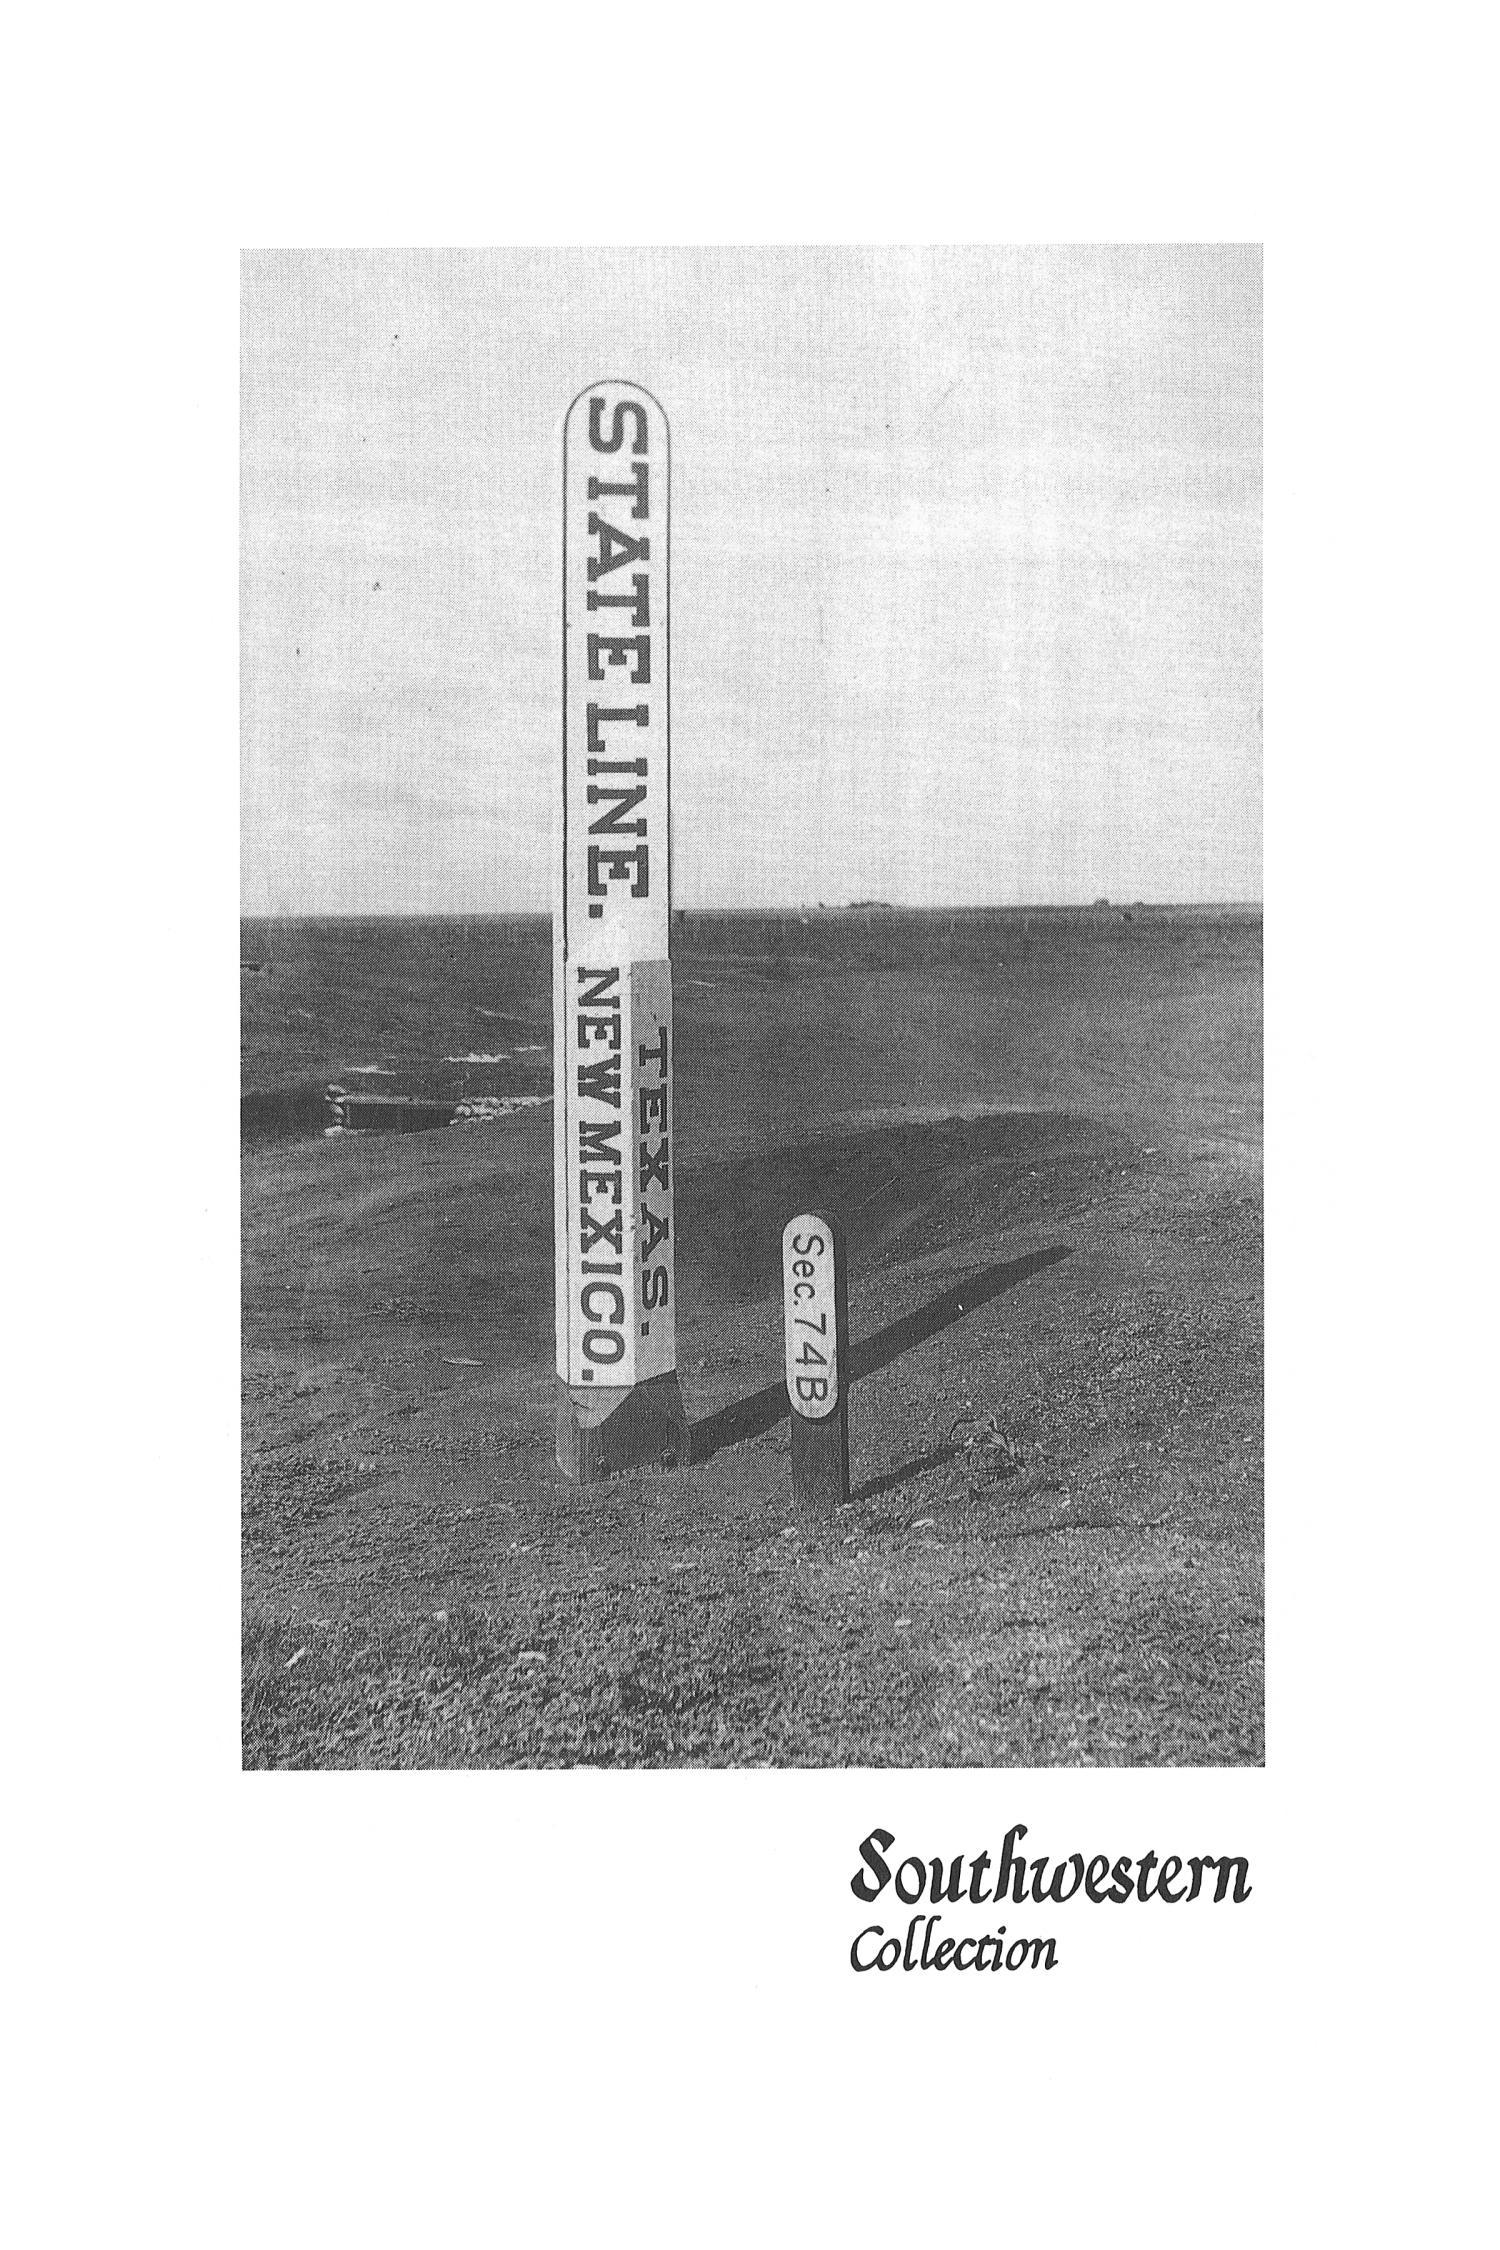 The Southwestern Historical Quarterly, Volume 105, July 2001 - April, 2002
                                                
                                                    495
                                                